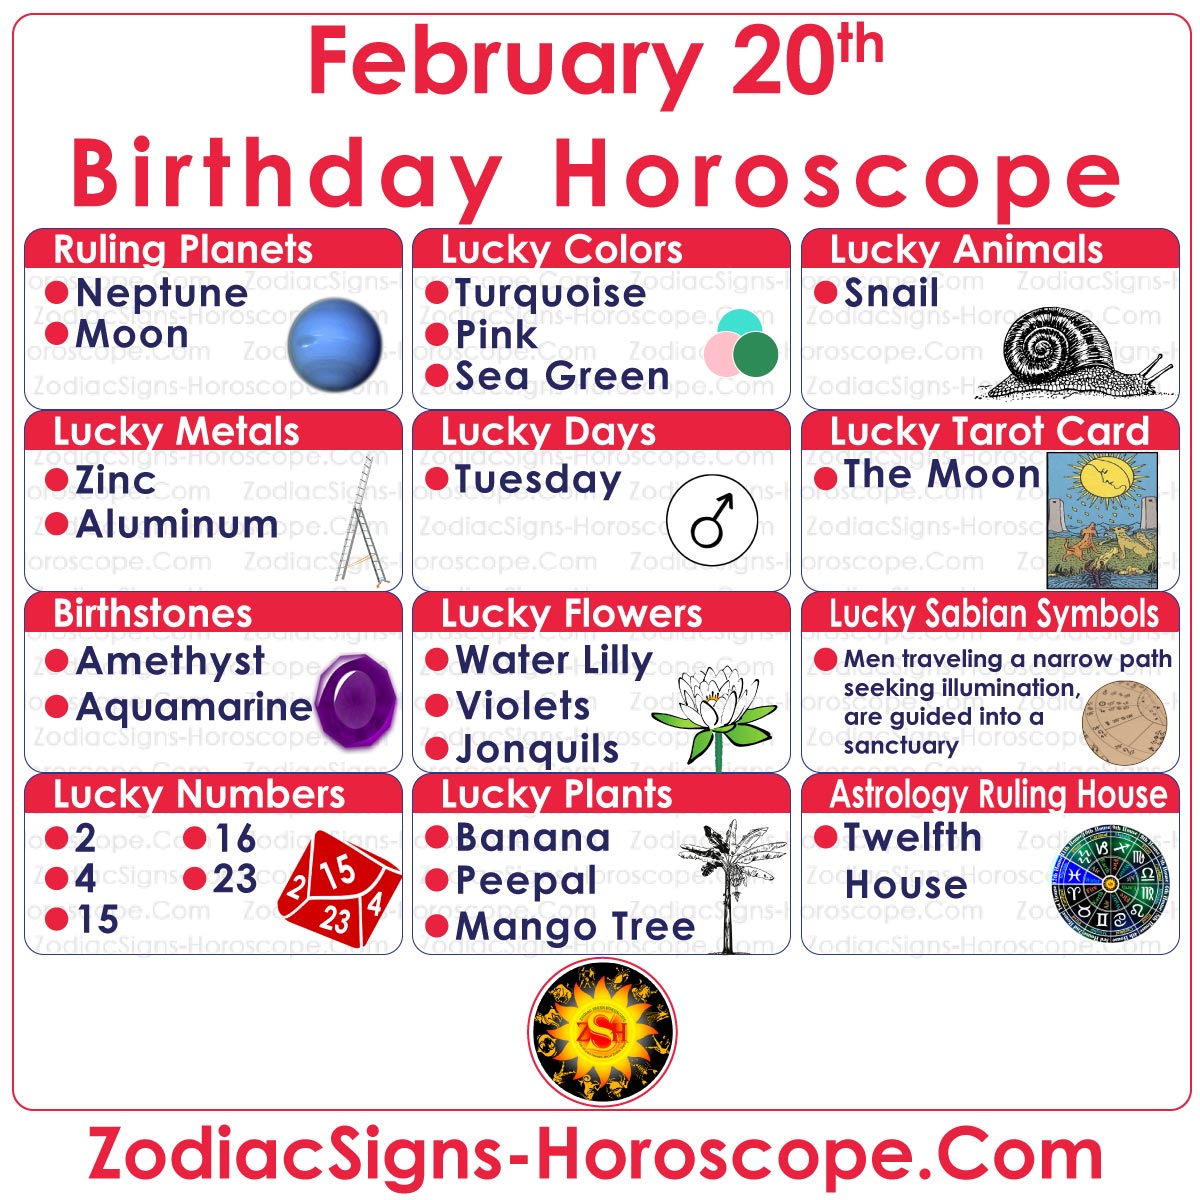 Everydayhoroscopes A Little More Than Just Horoscope Insights